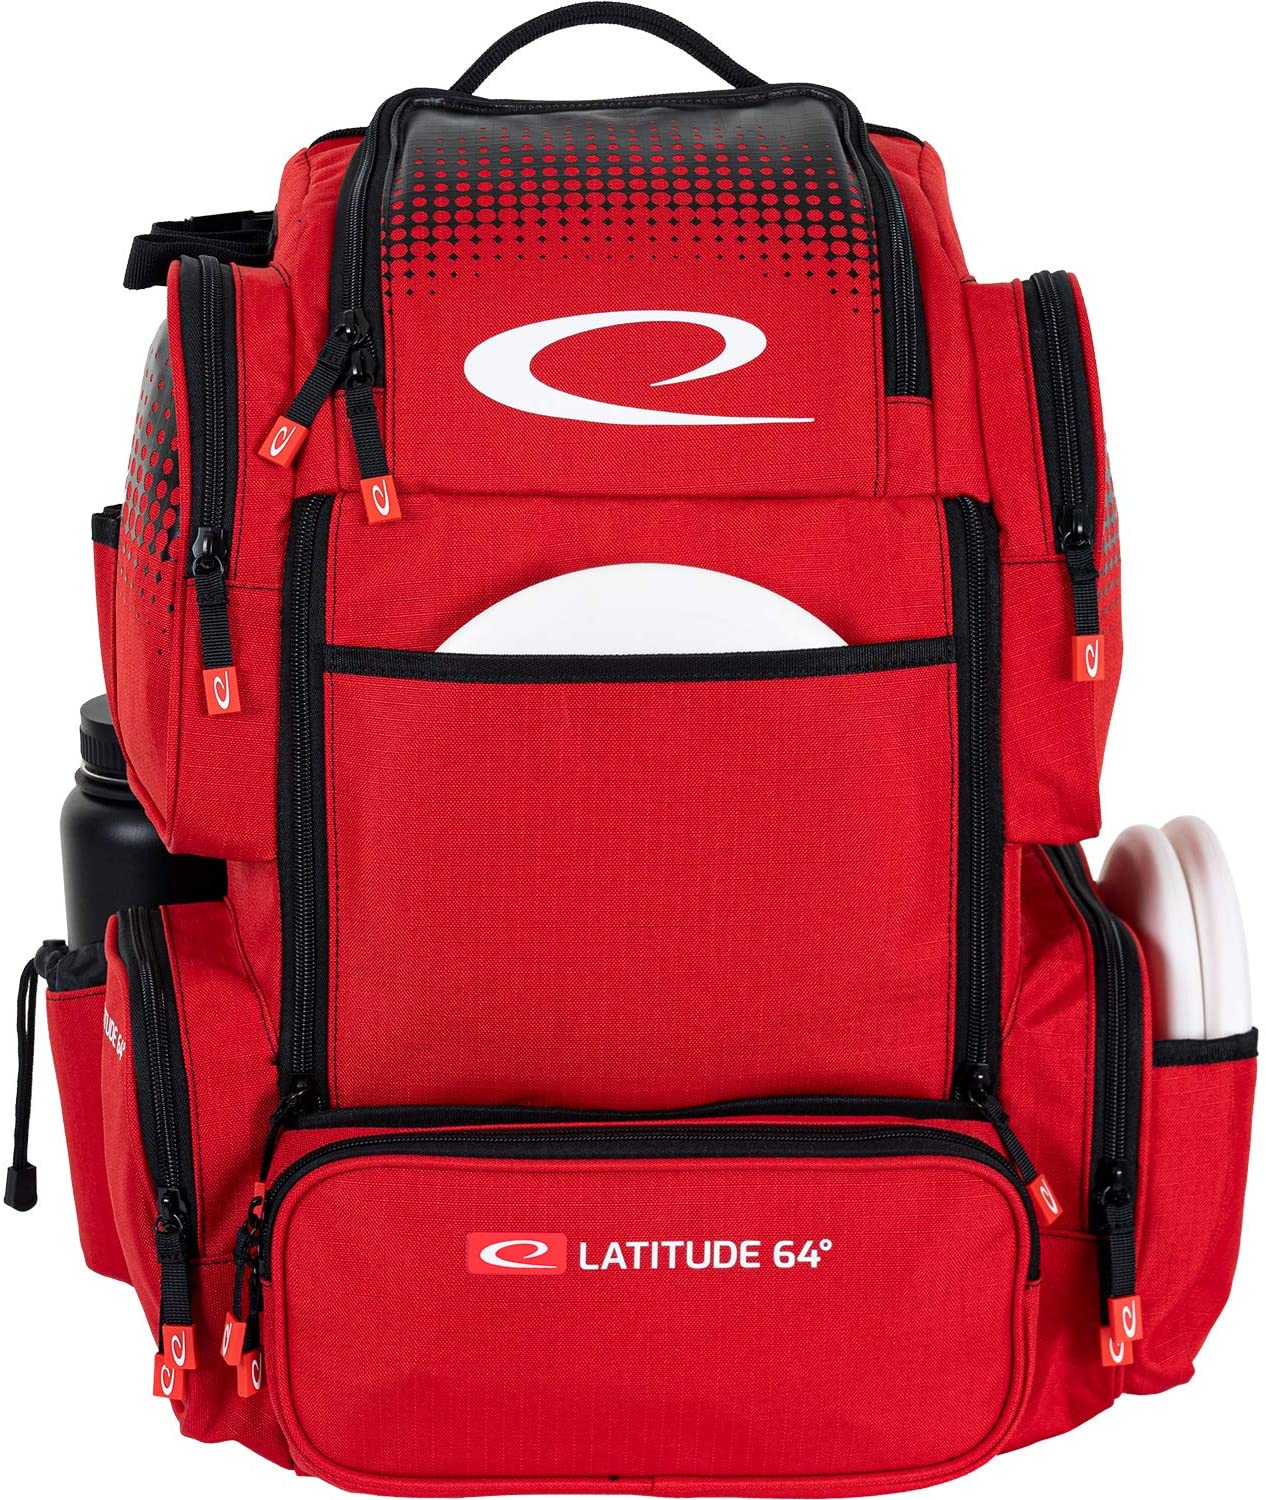 Latitude 64 Luxury E4 backpack Disc Golf Bag - Red - Latitude 64